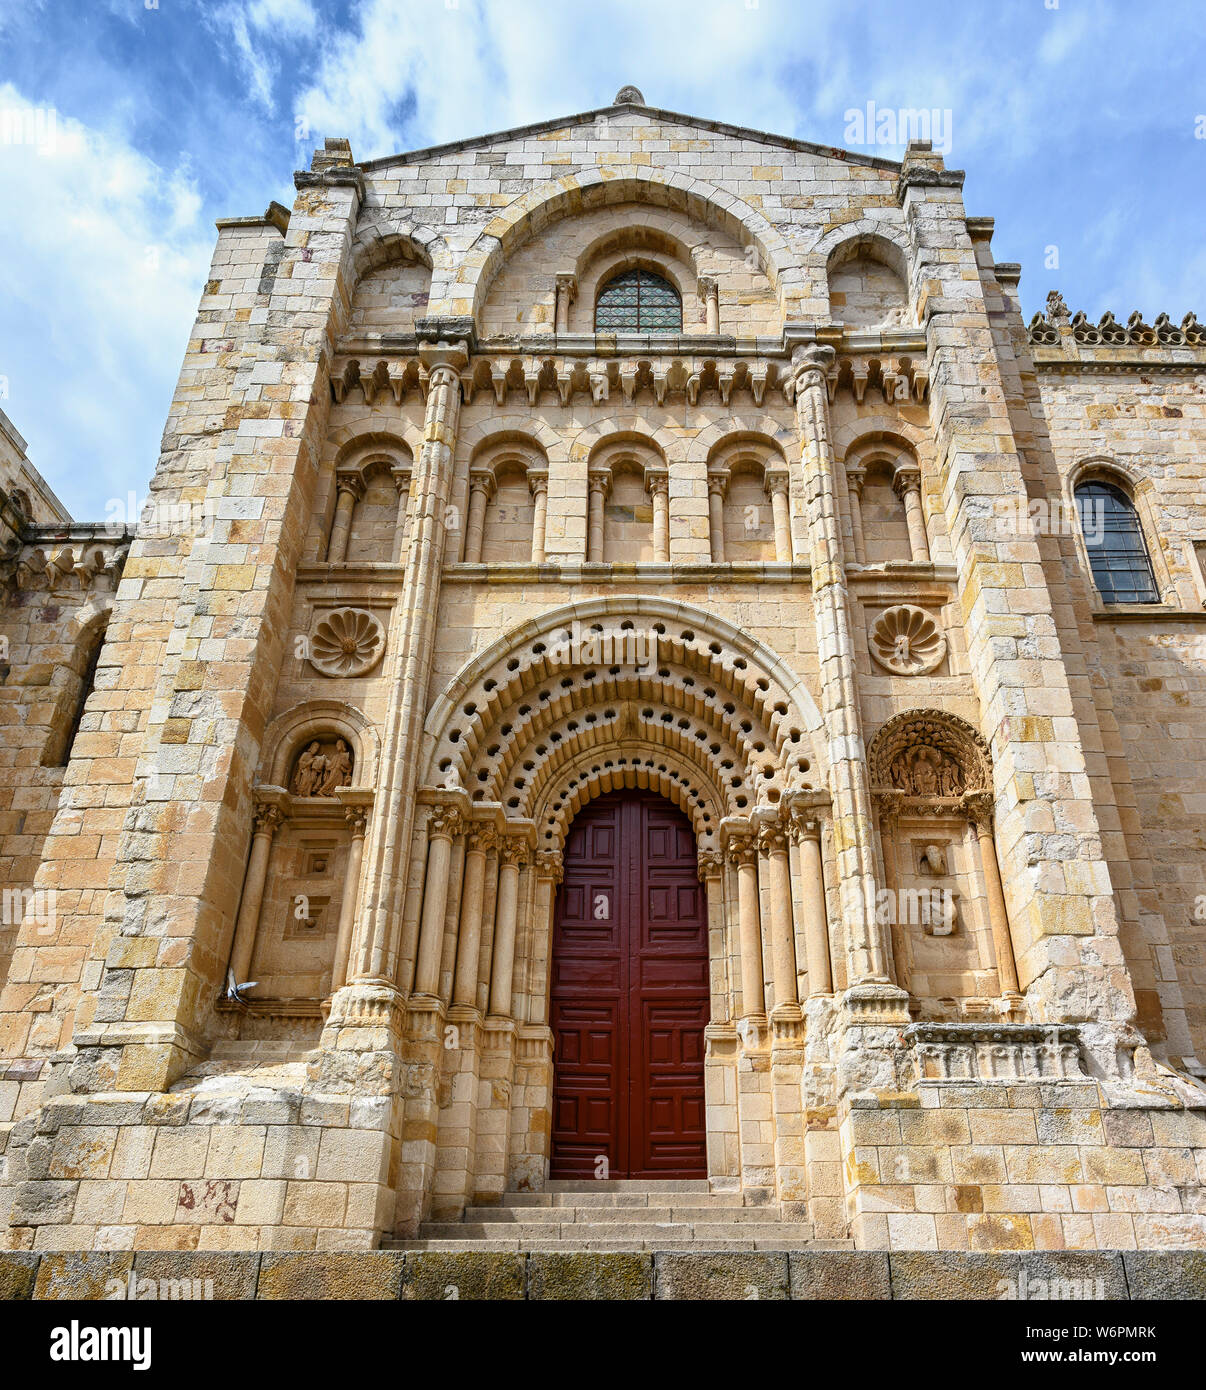 Im 12. Jahrhundert Puerta del Obispo (Bishop's Türrahmen) Zamora die romanische Kathedrale, Zamora, Provinz Zamora, Castilla y Leon, Spanien. Stockfoto